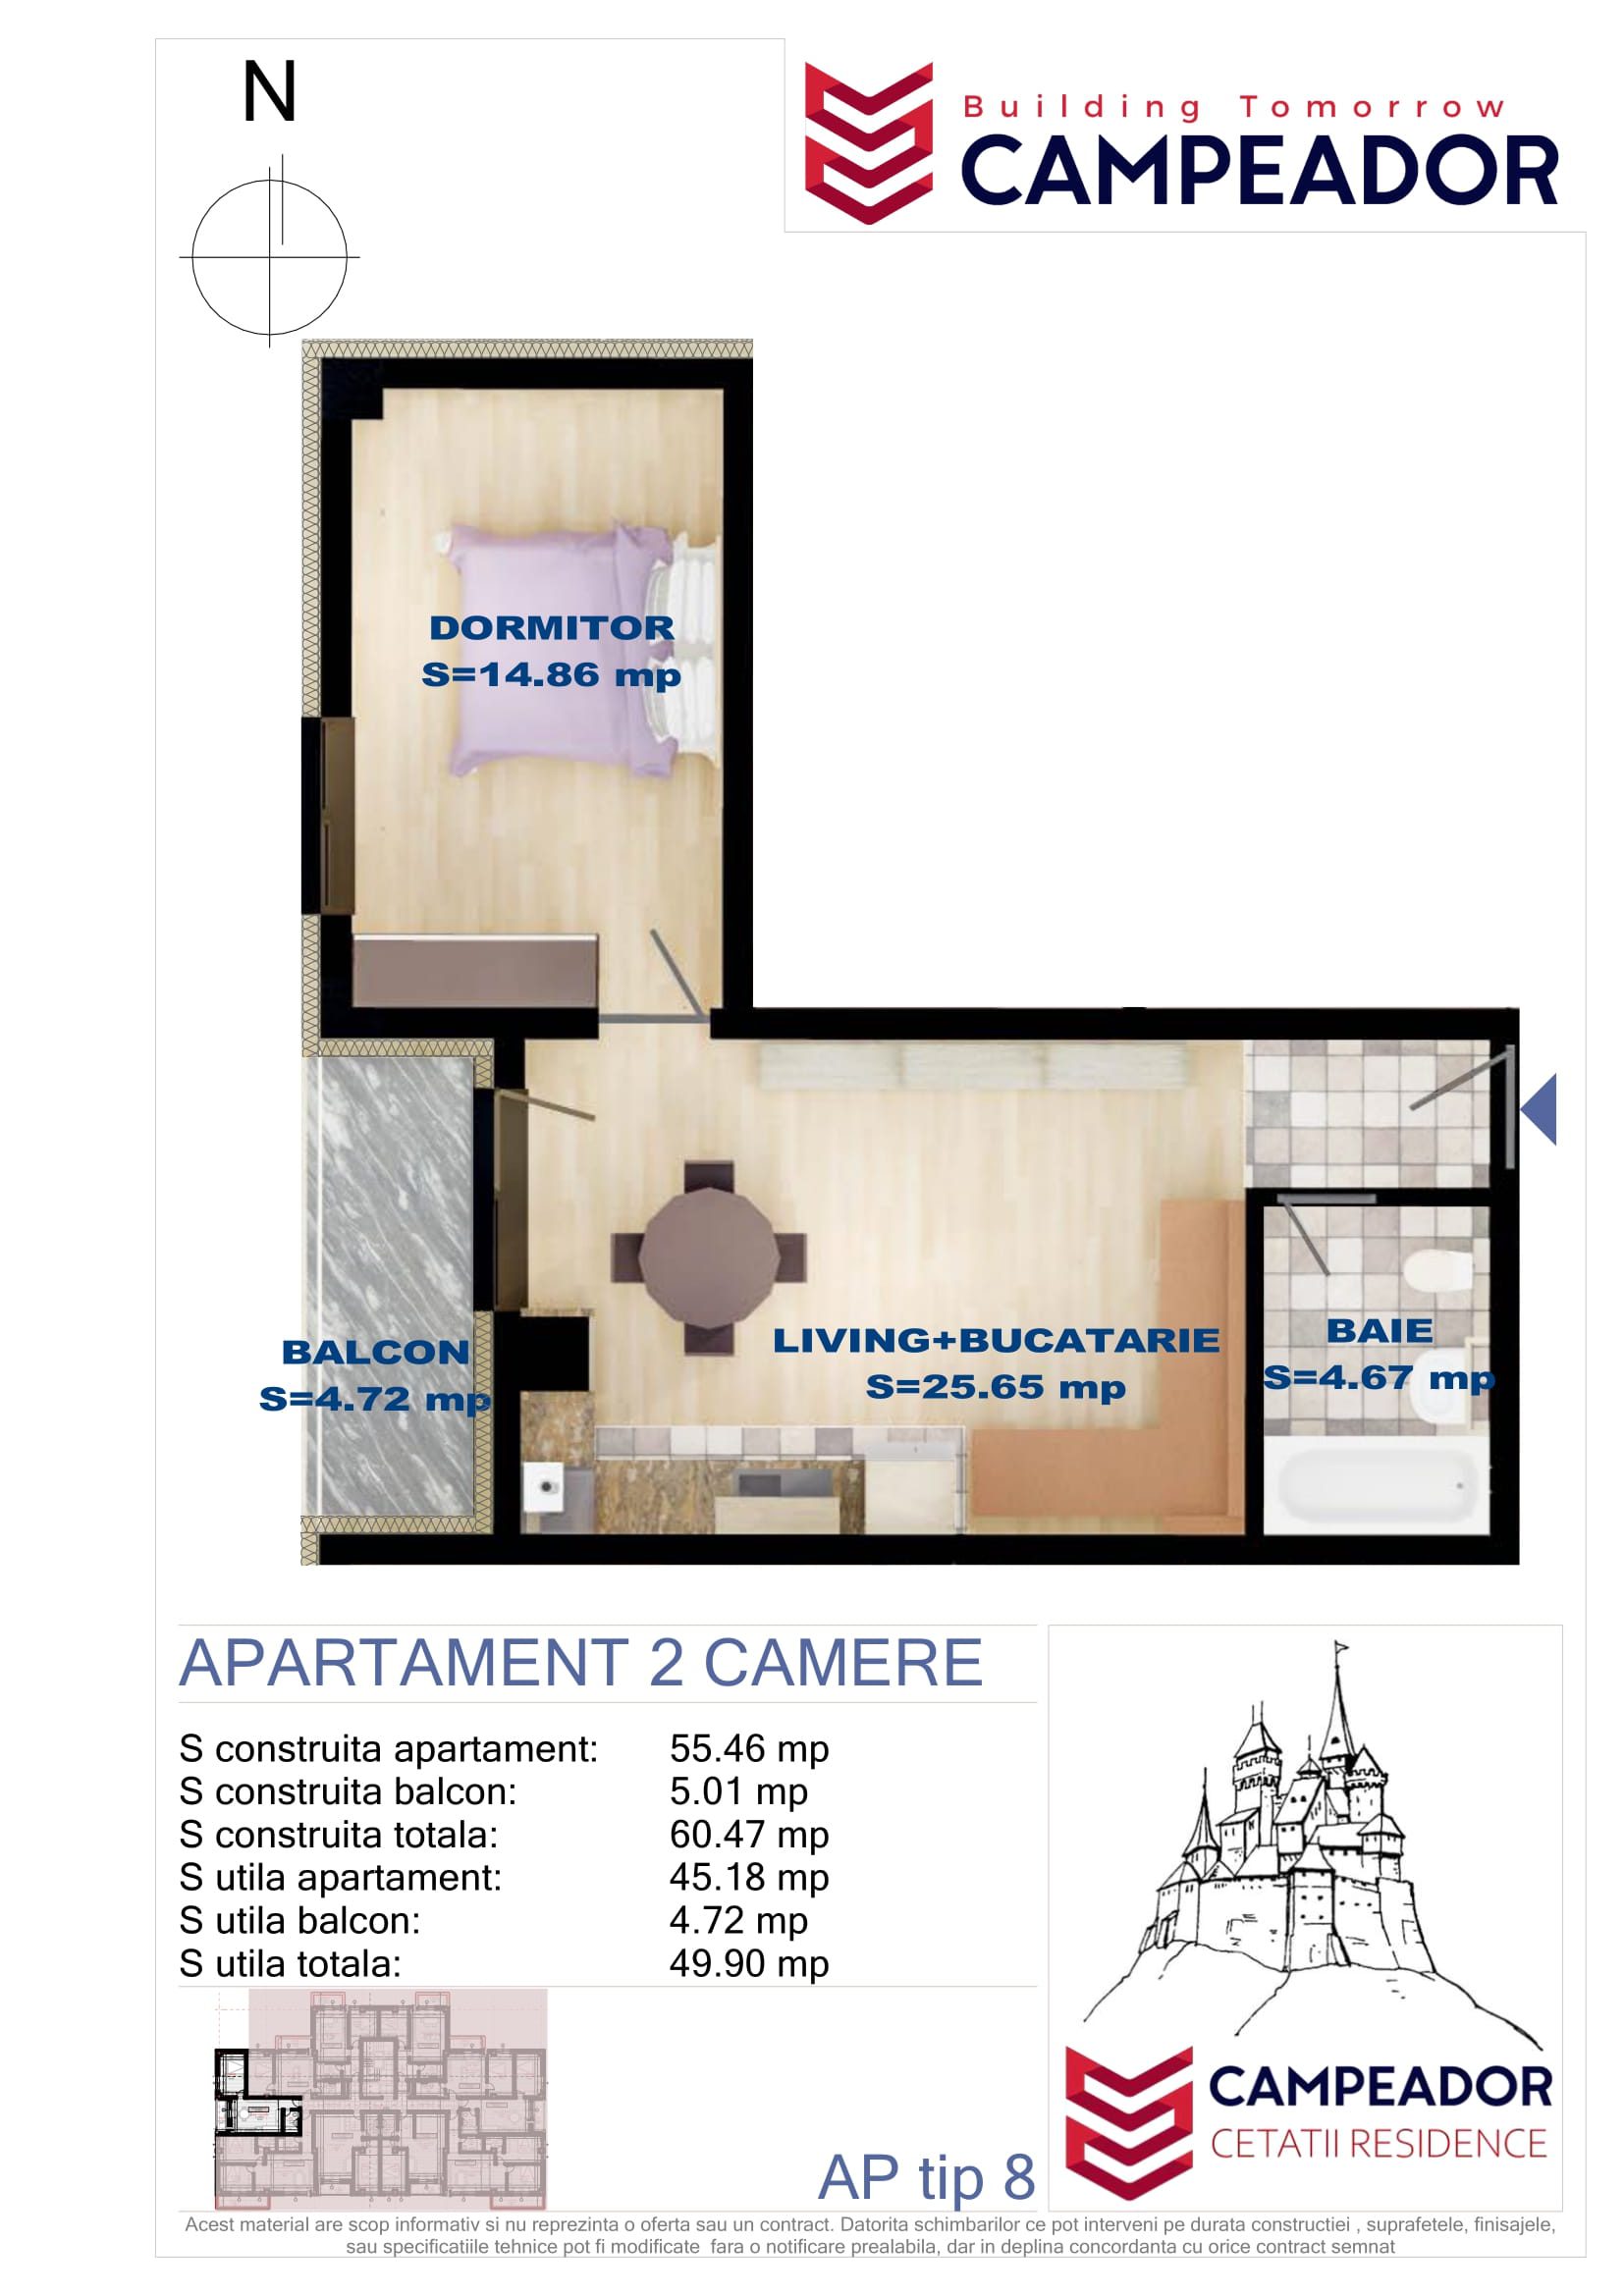 APARTAMENT TIP 8 - Campeador Cetatii Residence